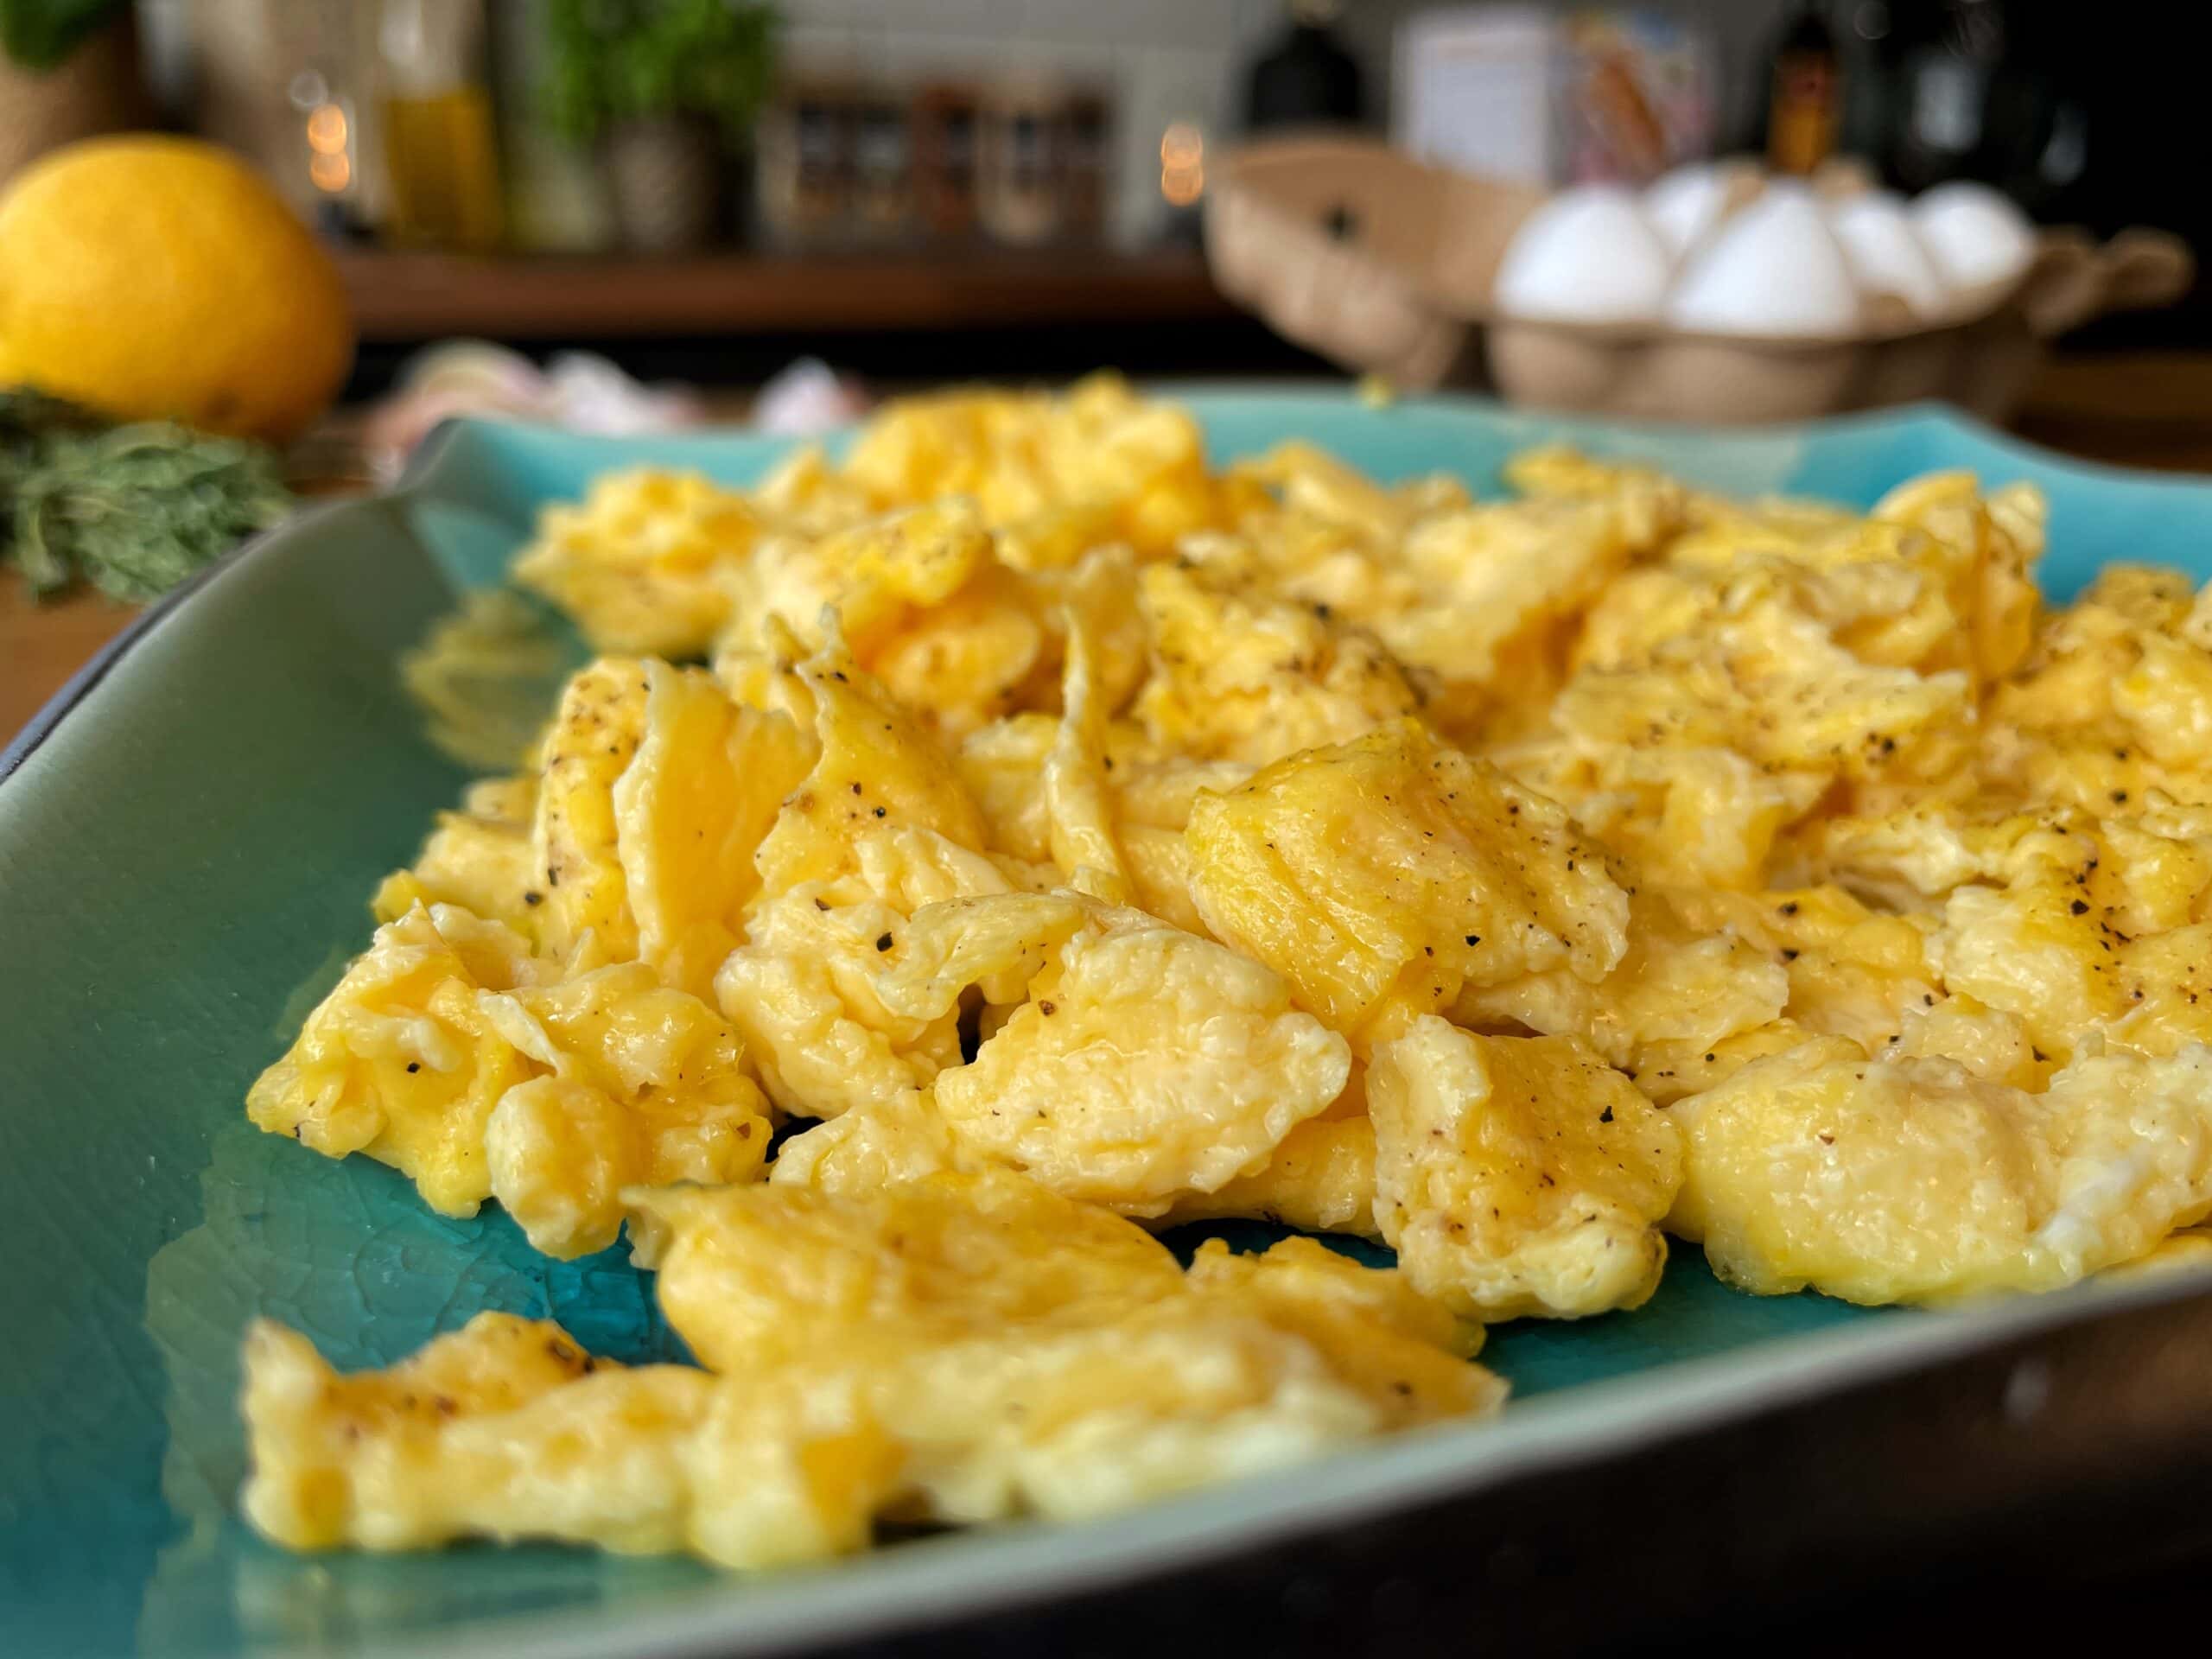 Hoe maak je scrambled eggs